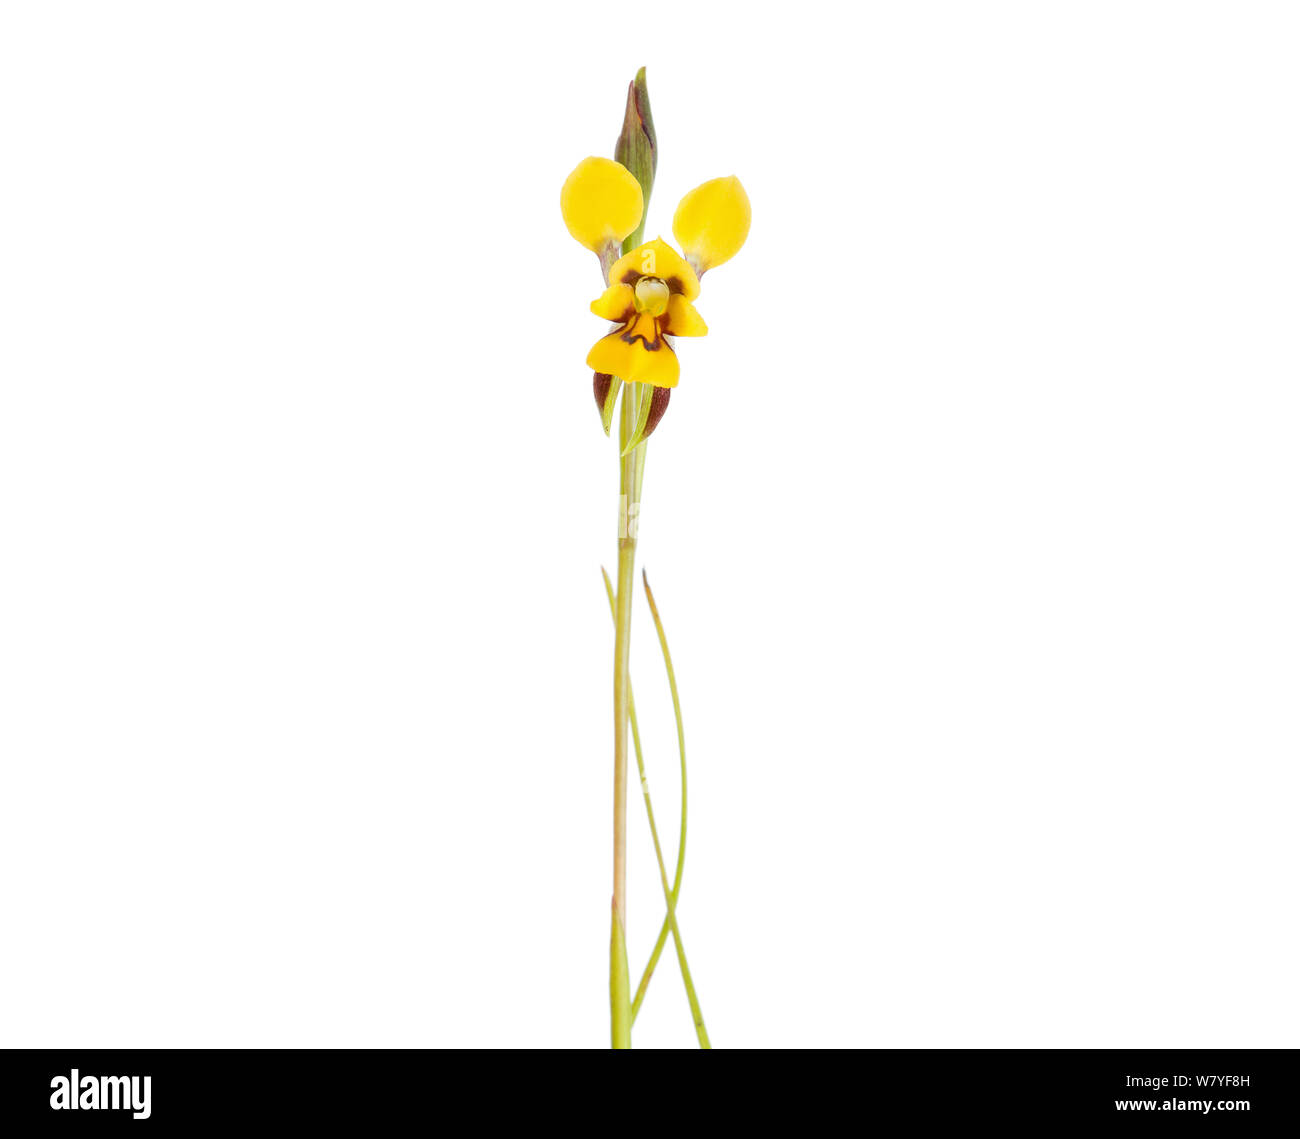 Elegant donkey orchid (Diuris concinna), Western Australia. meetyourneighbours.net project Stock Photo